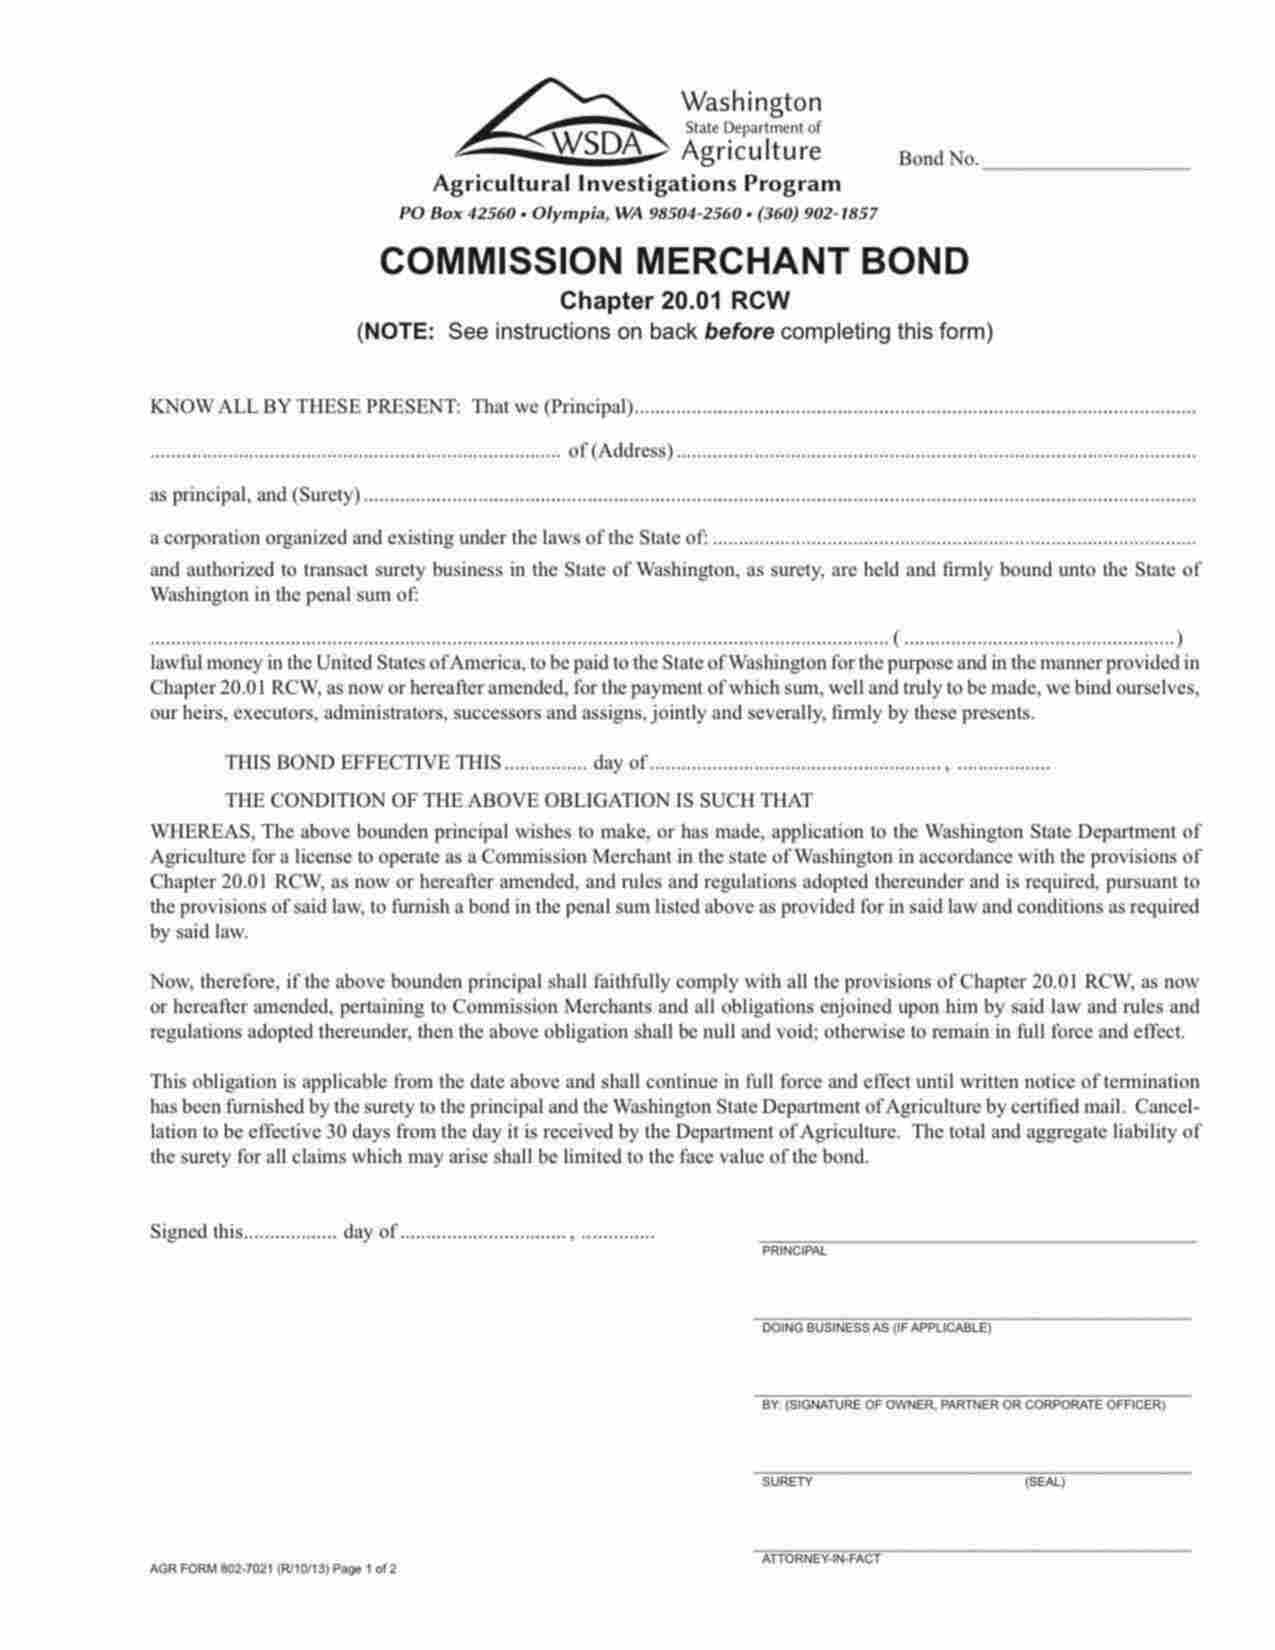 Washington Commission Merchant Bond Form